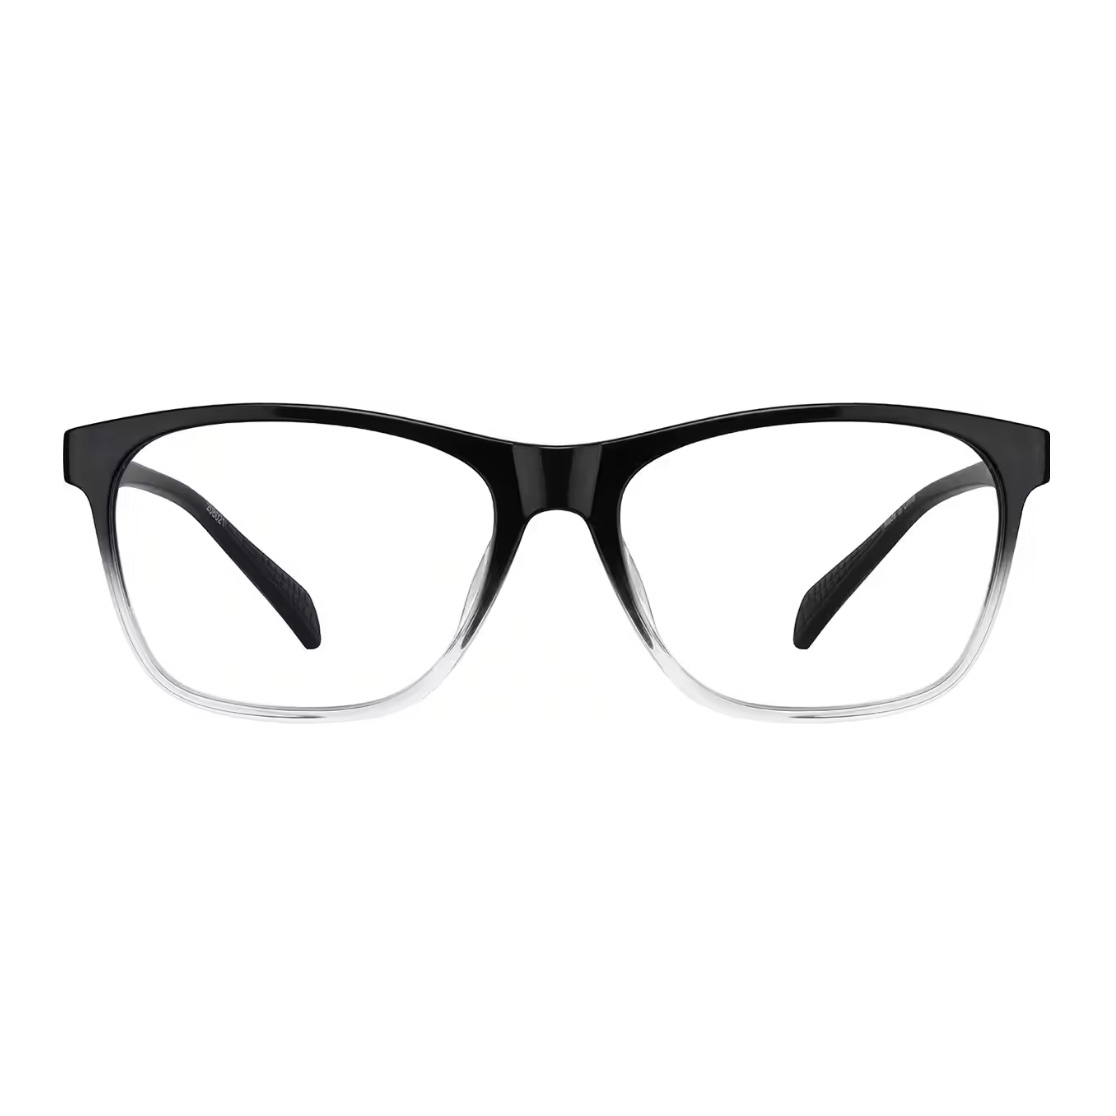 Square black and white glasses